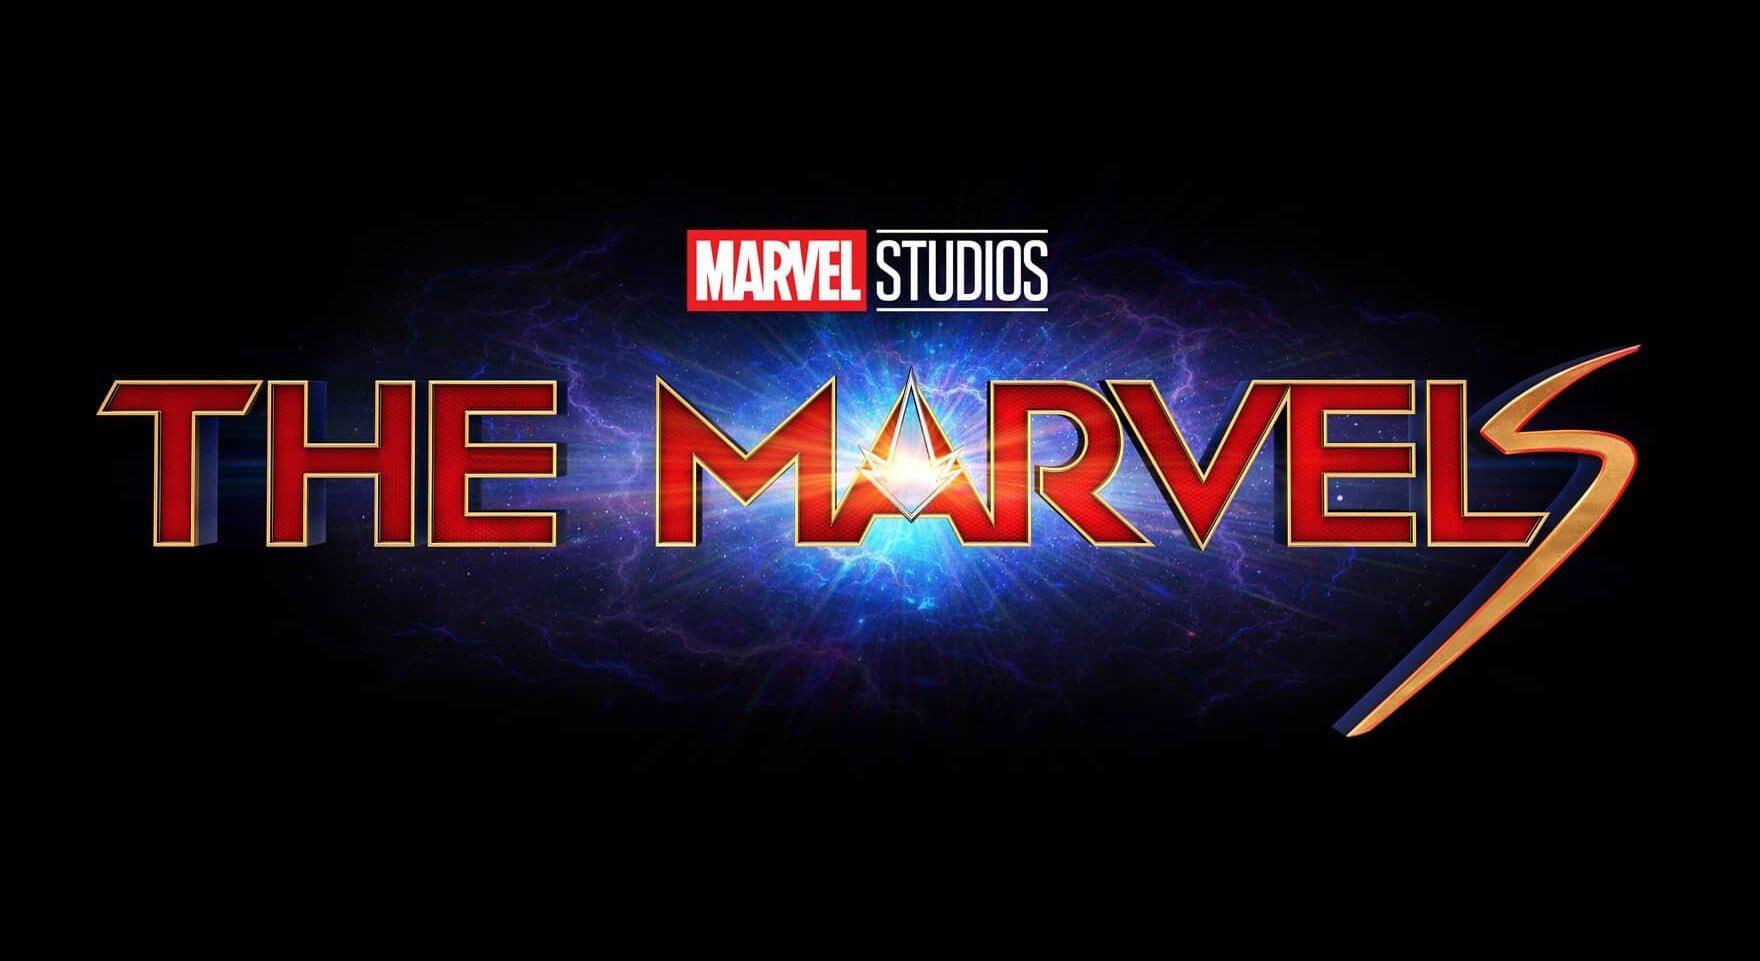 the-marvels-updated-logo.jpg